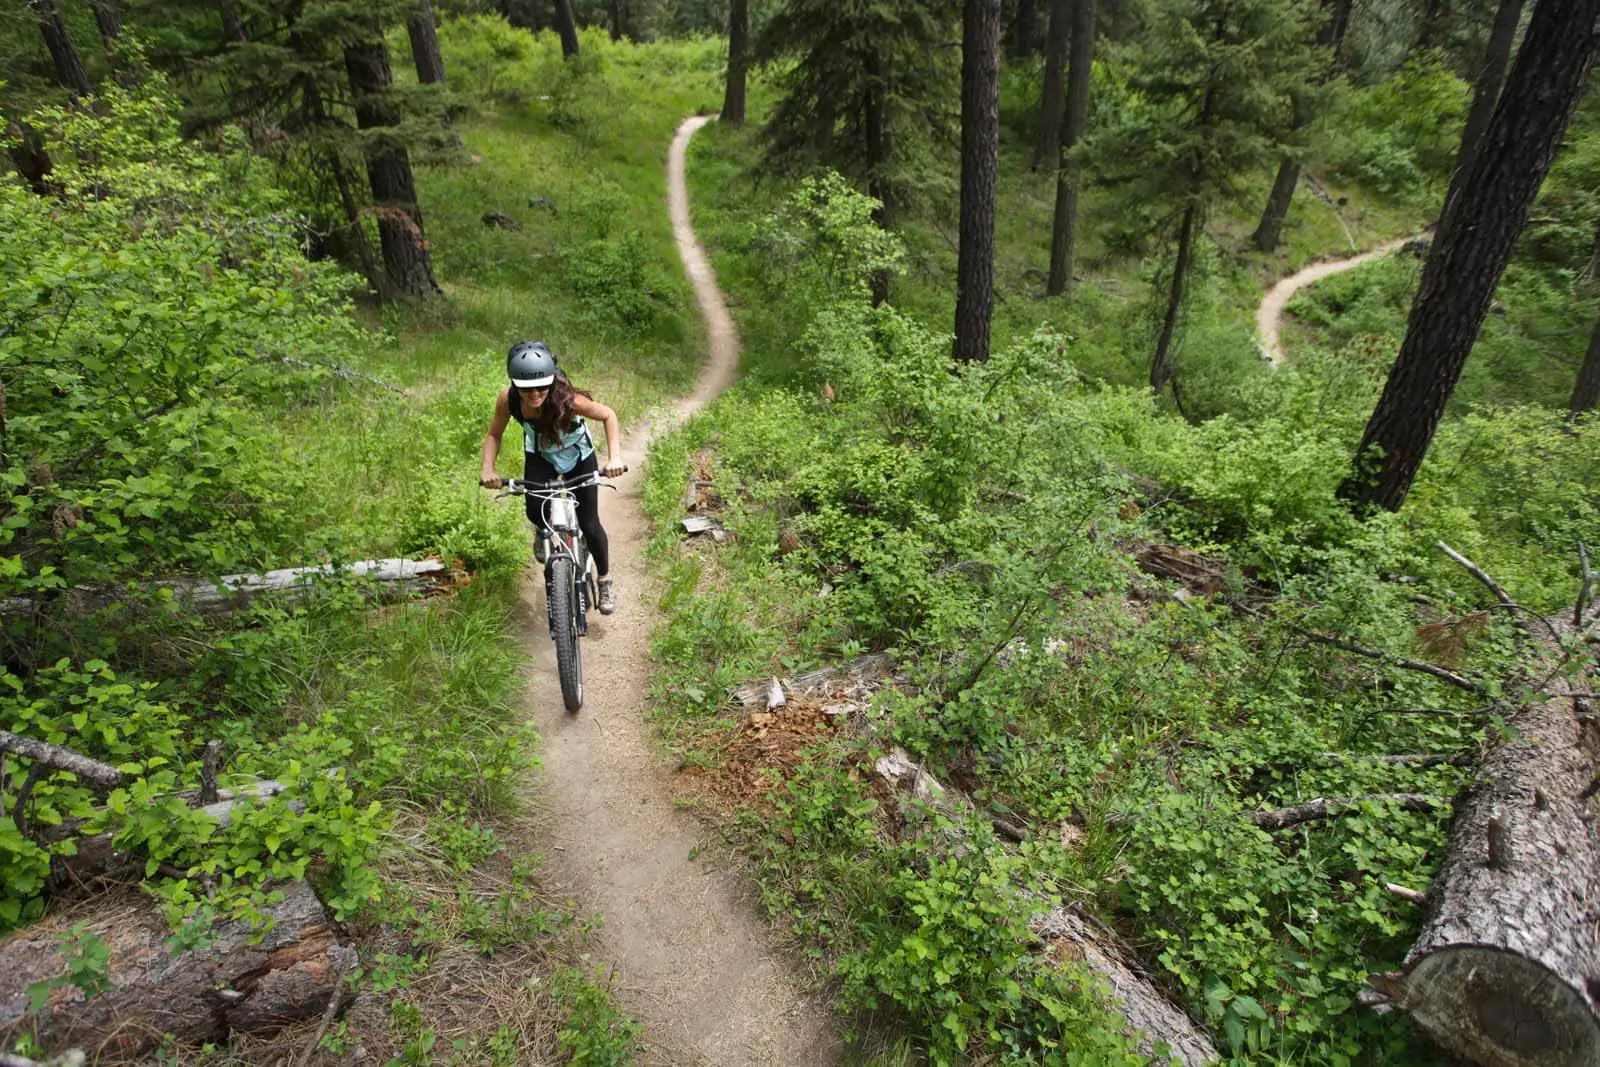 A woman riding a mountain bike down a trail through a forest of tall trees.